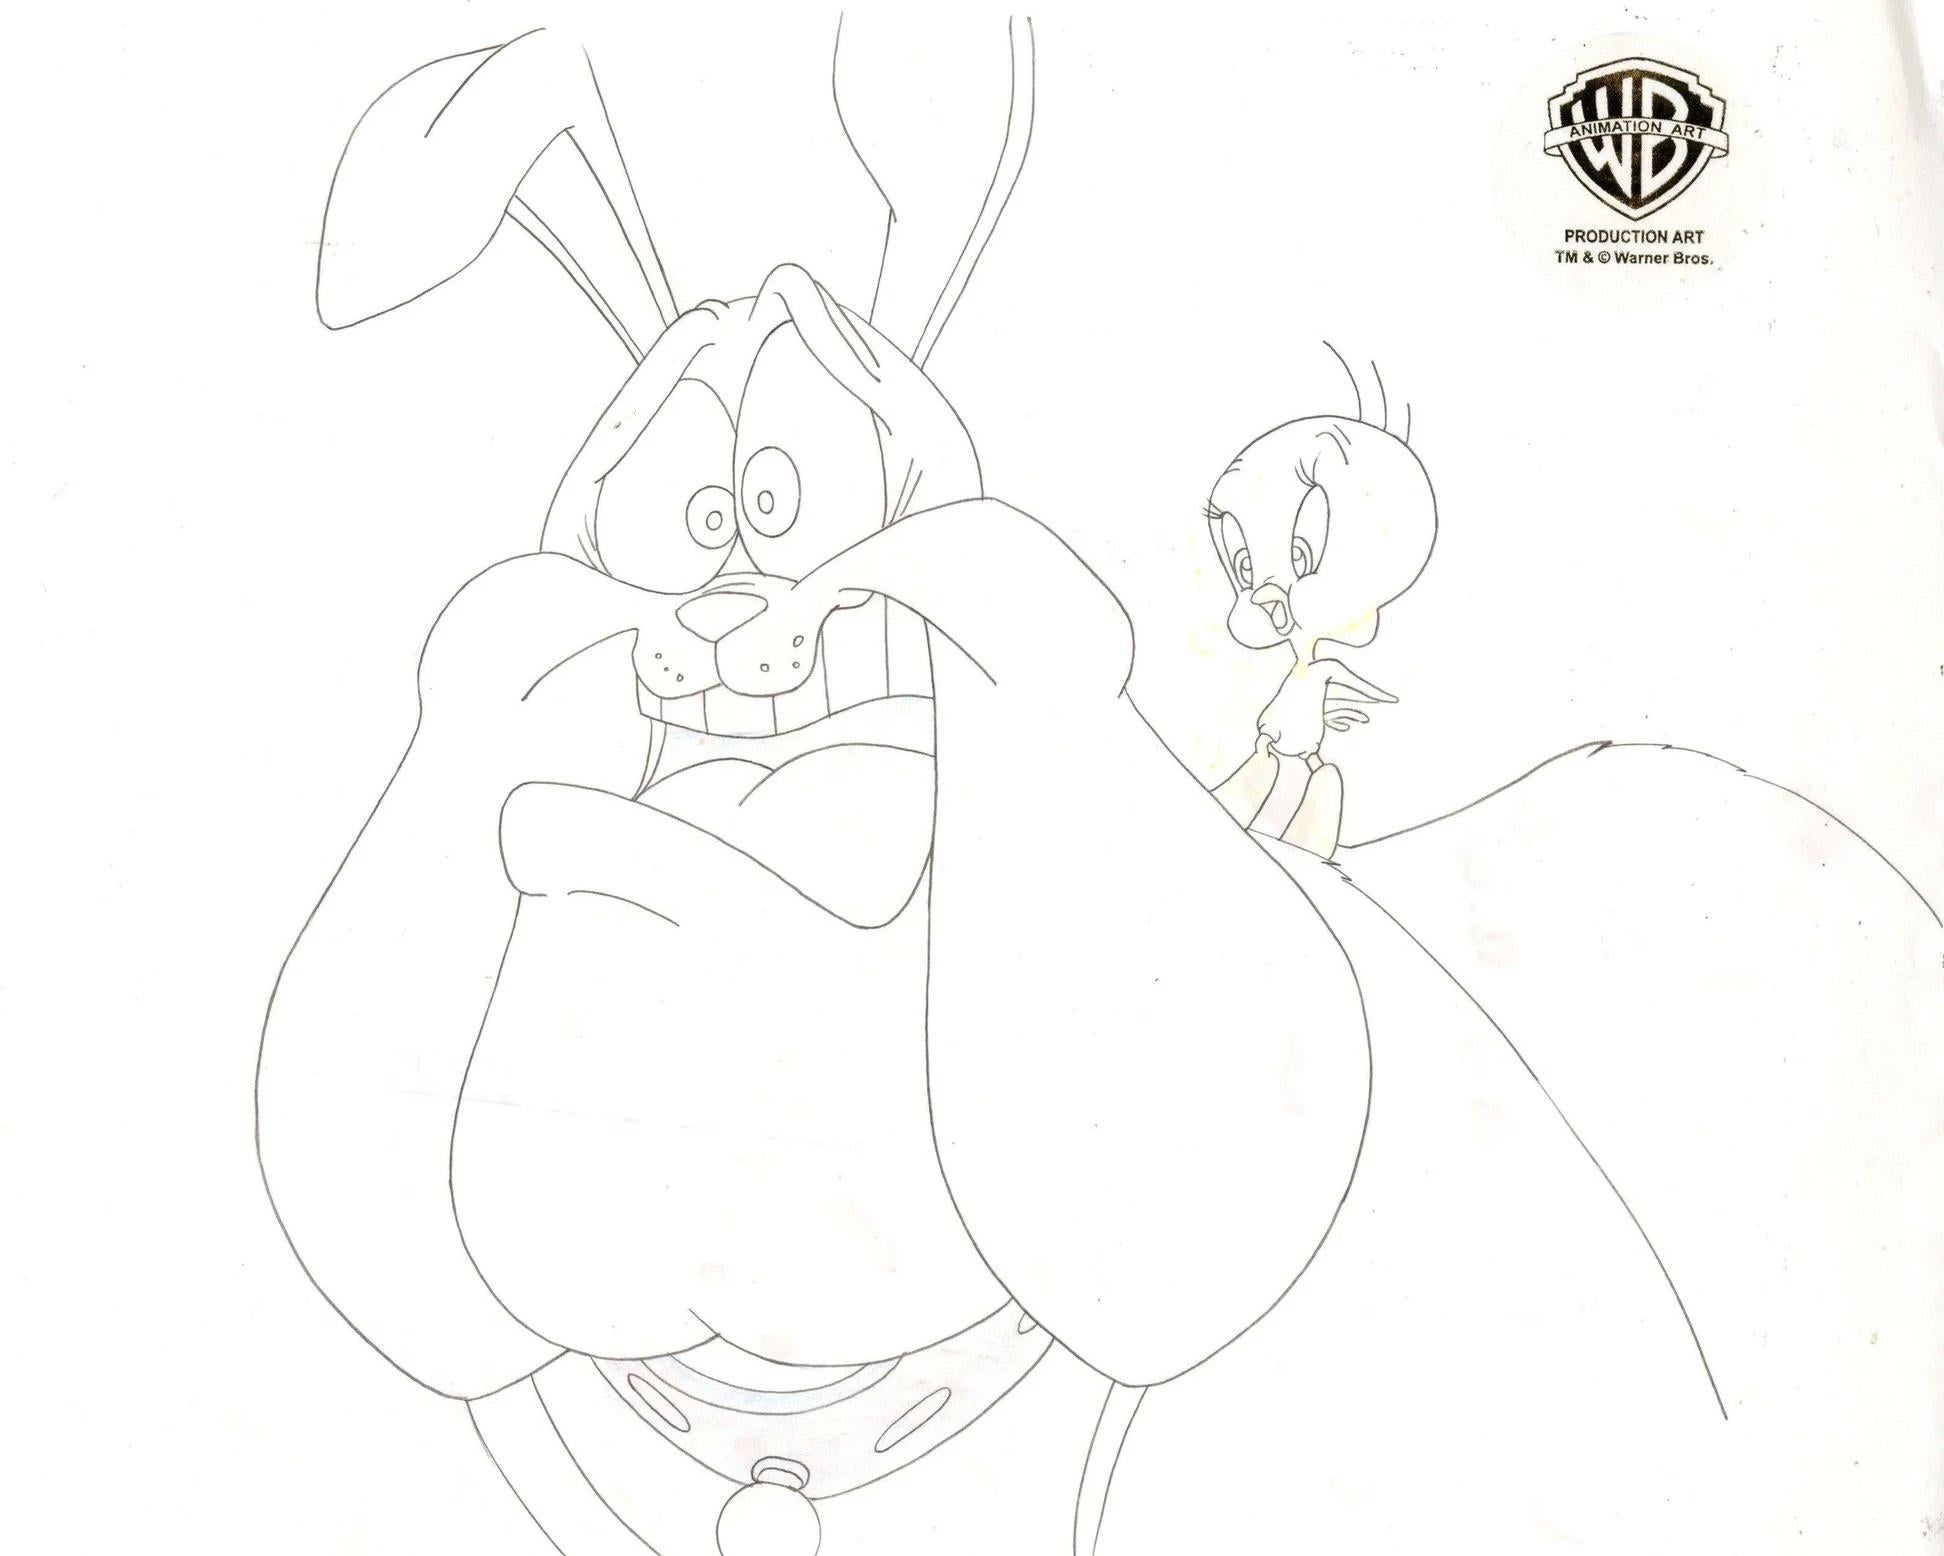 Looney Tunes Original Production Drawing: Tweety and Hector - Art by Warner Bros. Studio Artists